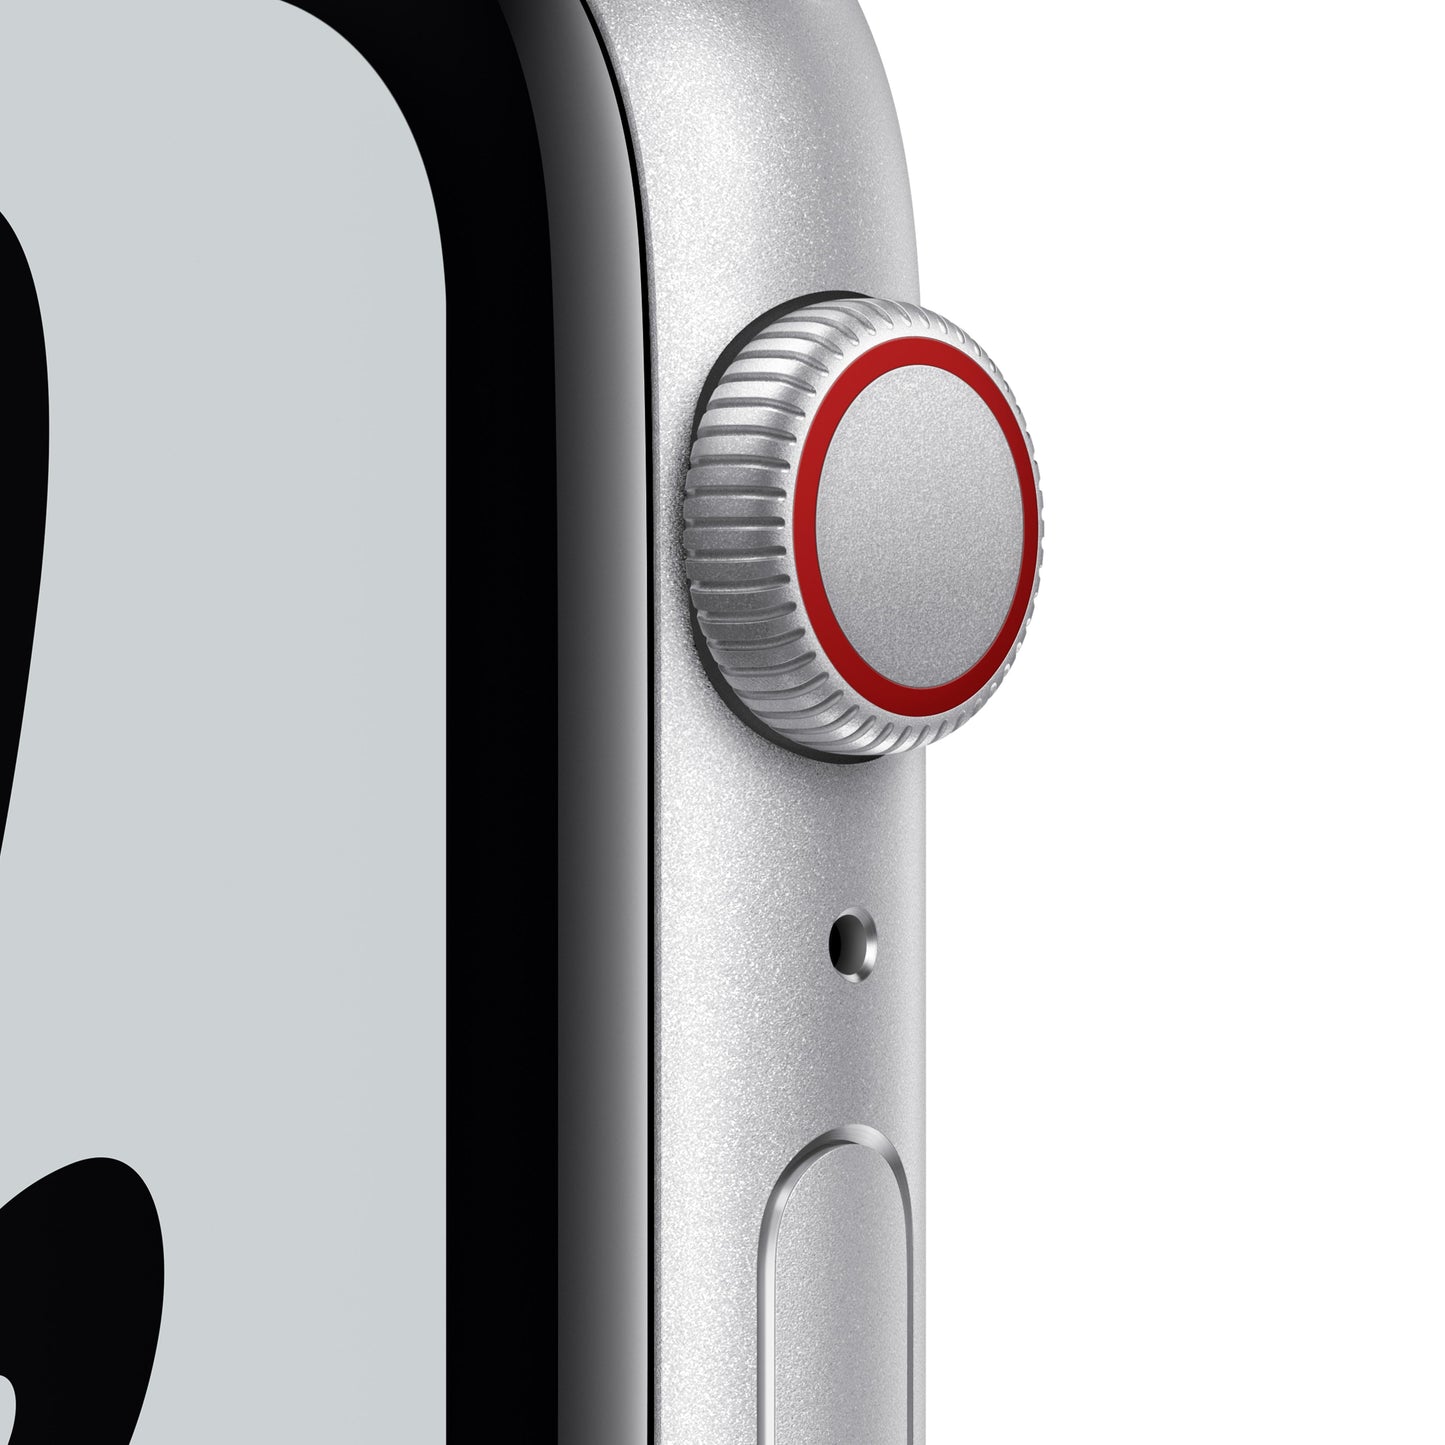 Apple Watch Nike SE (GPS + Cellular) - Caja de aluminio en plata de 44 mm - Correa Nike Sport platino puro/negro - Talla única